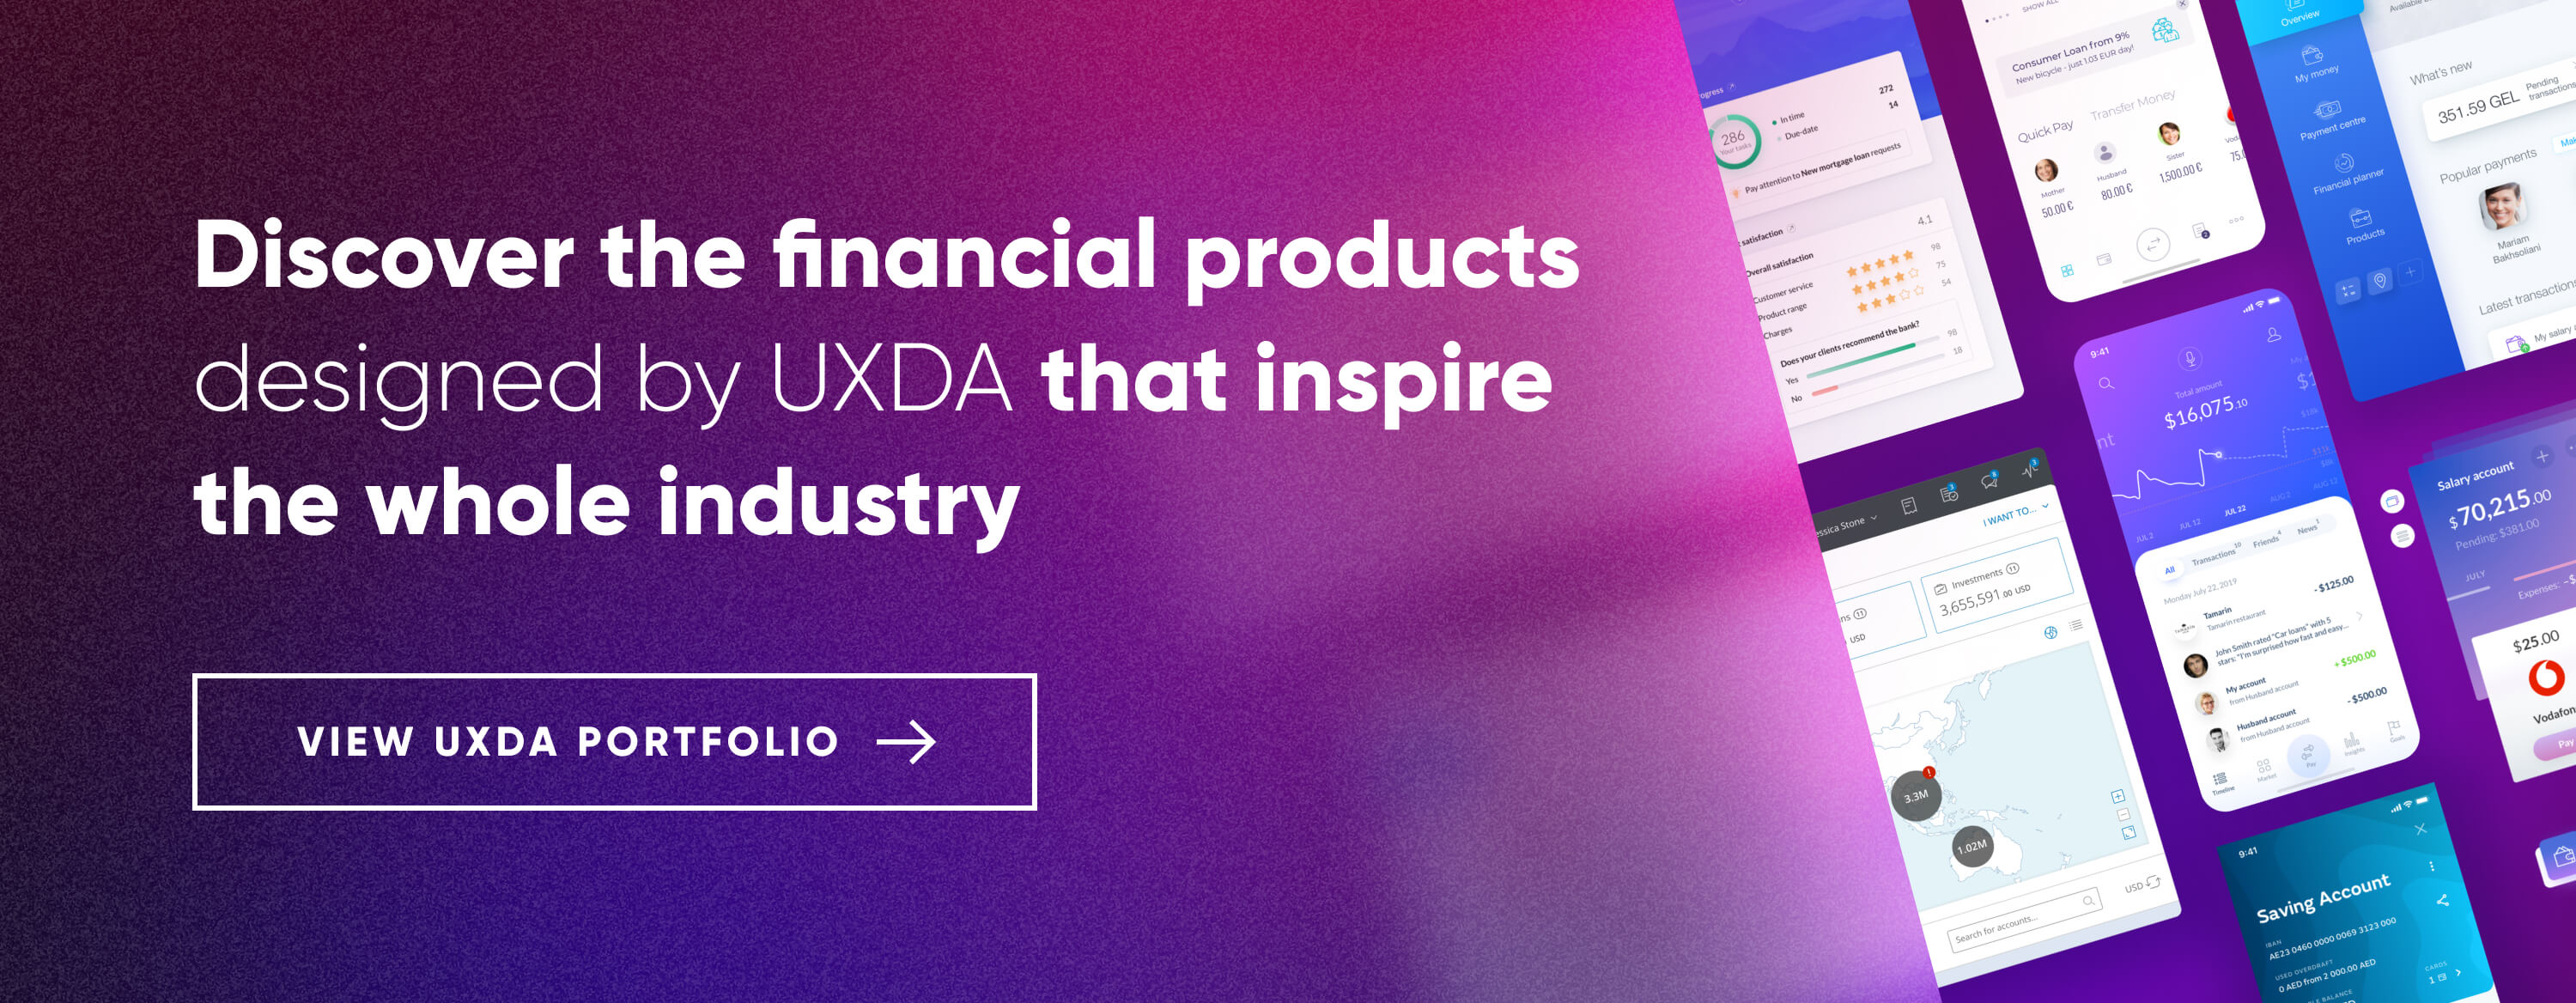 uxda-portfolio-financial-digital-product-inspire-industry-ux-1669632060.jpg